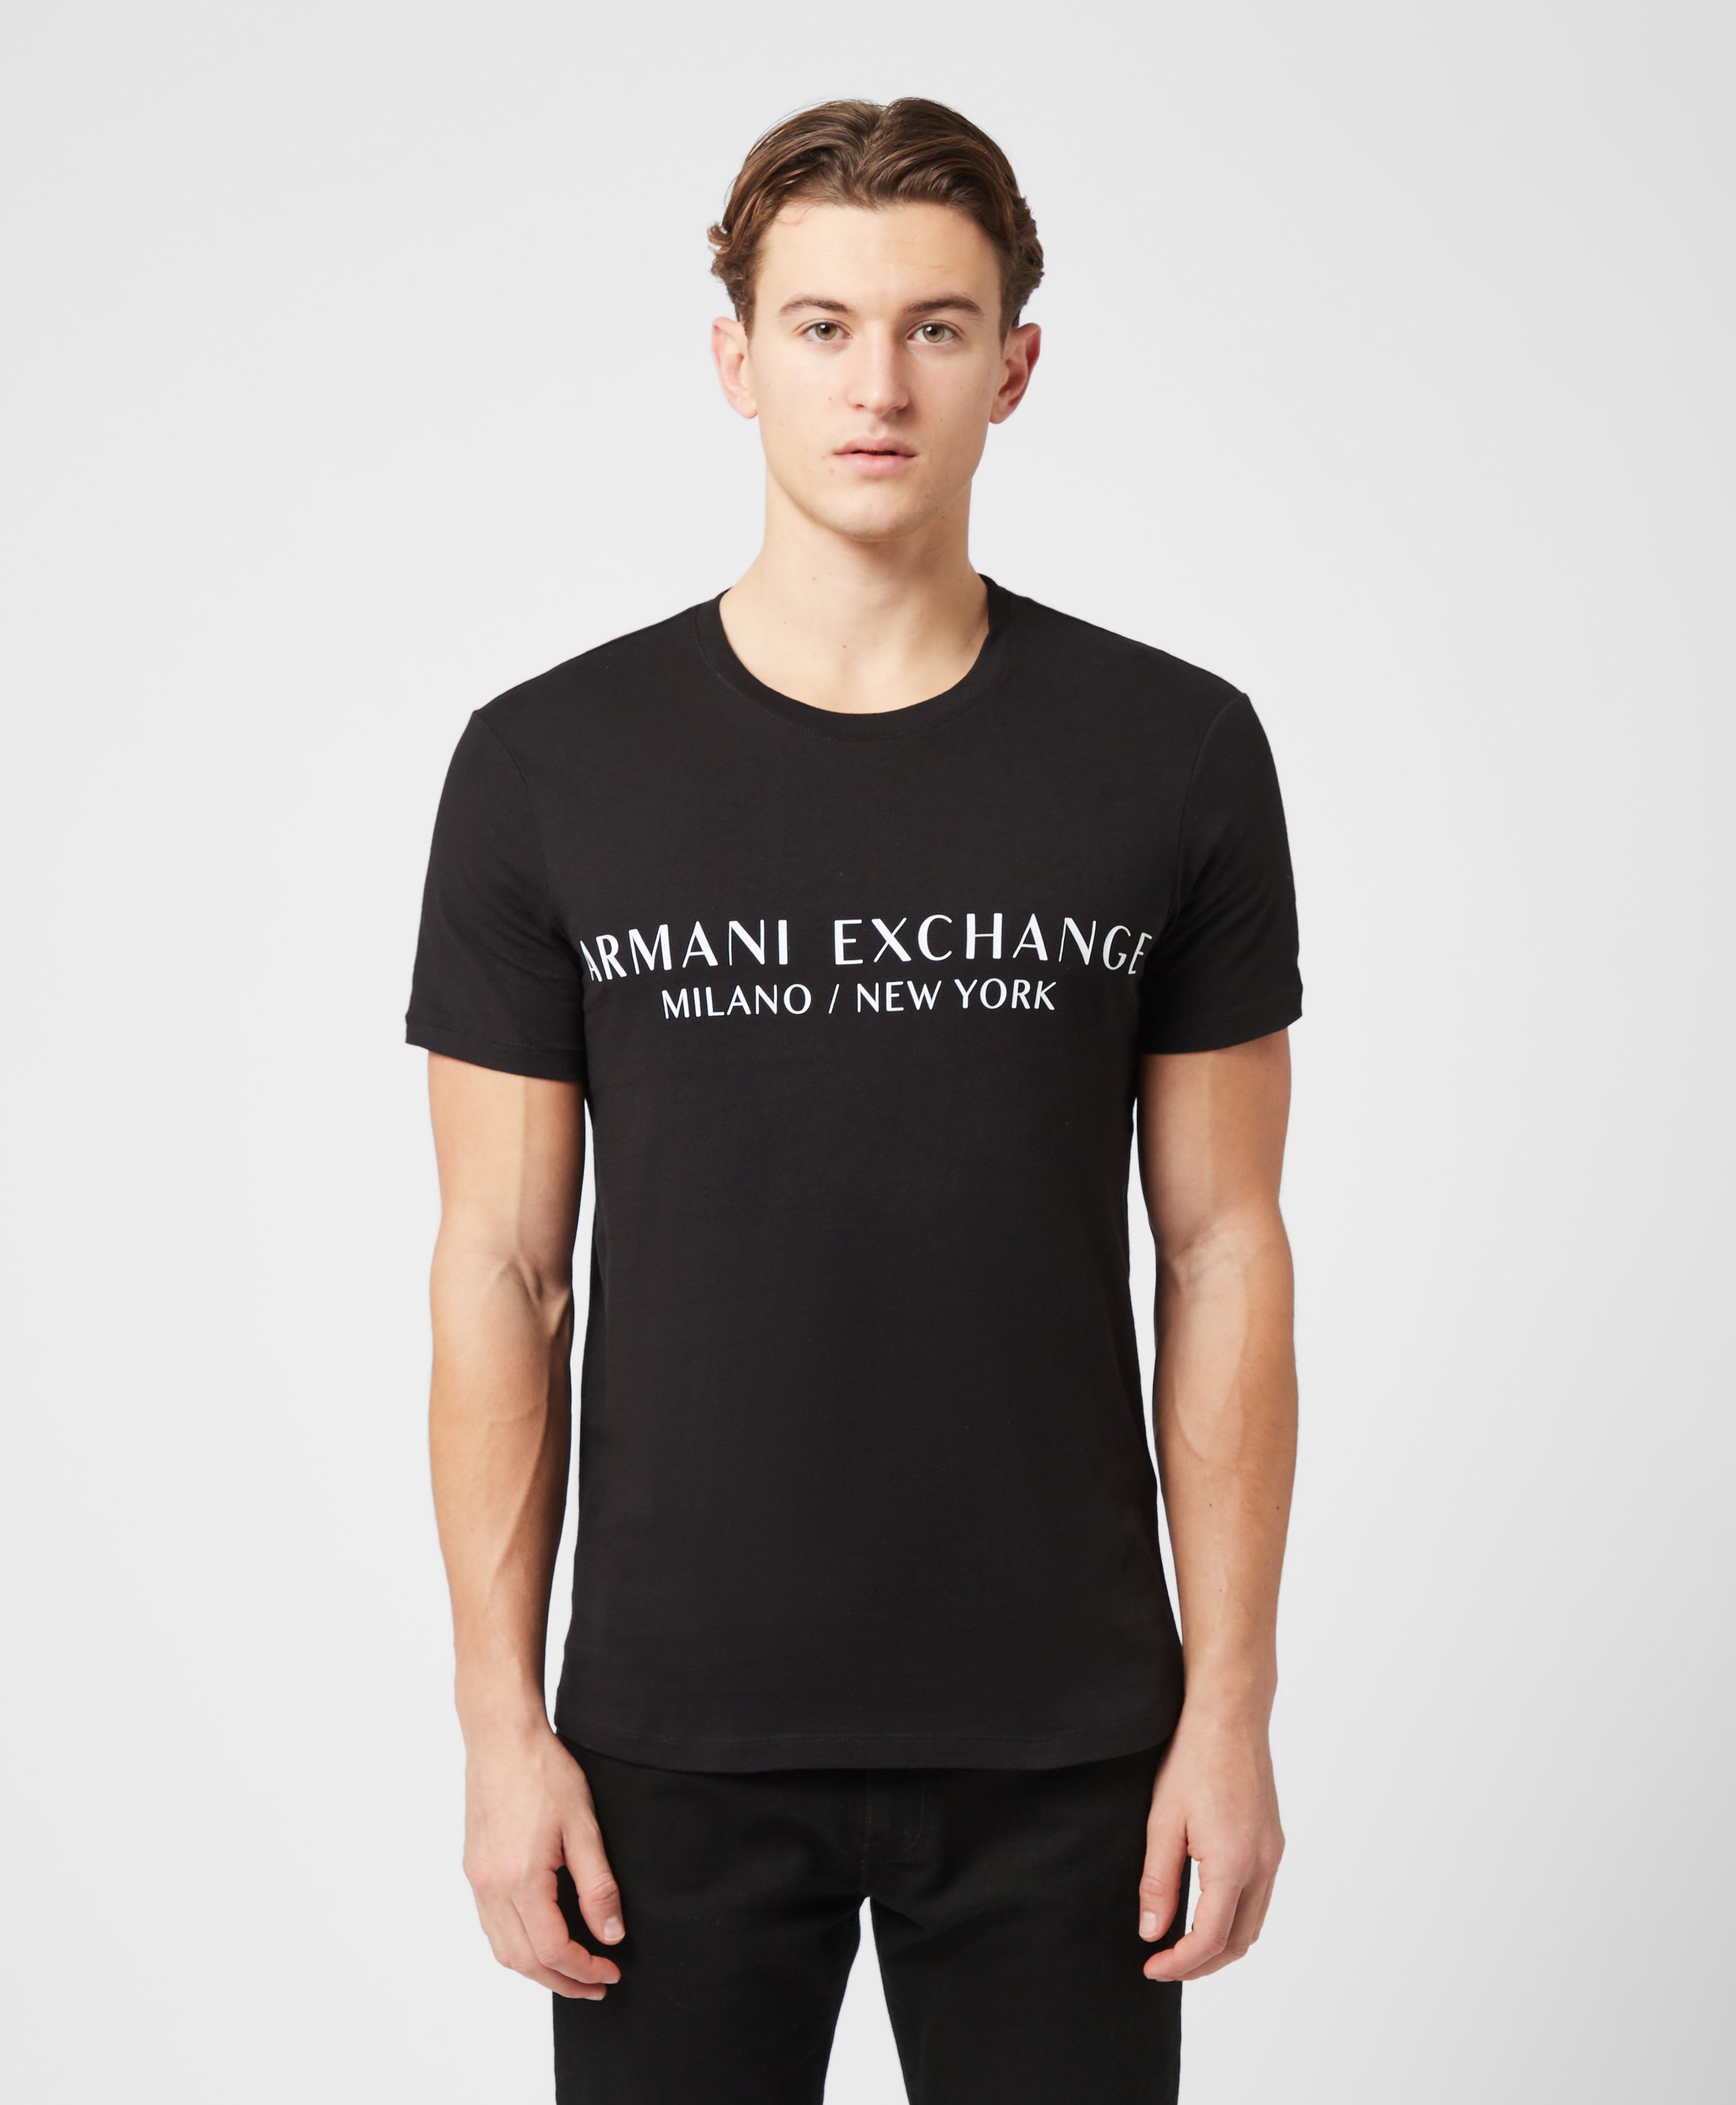 Armani Exchange Milano to New York Short Sleeve T-Shirt | scotts Menswear